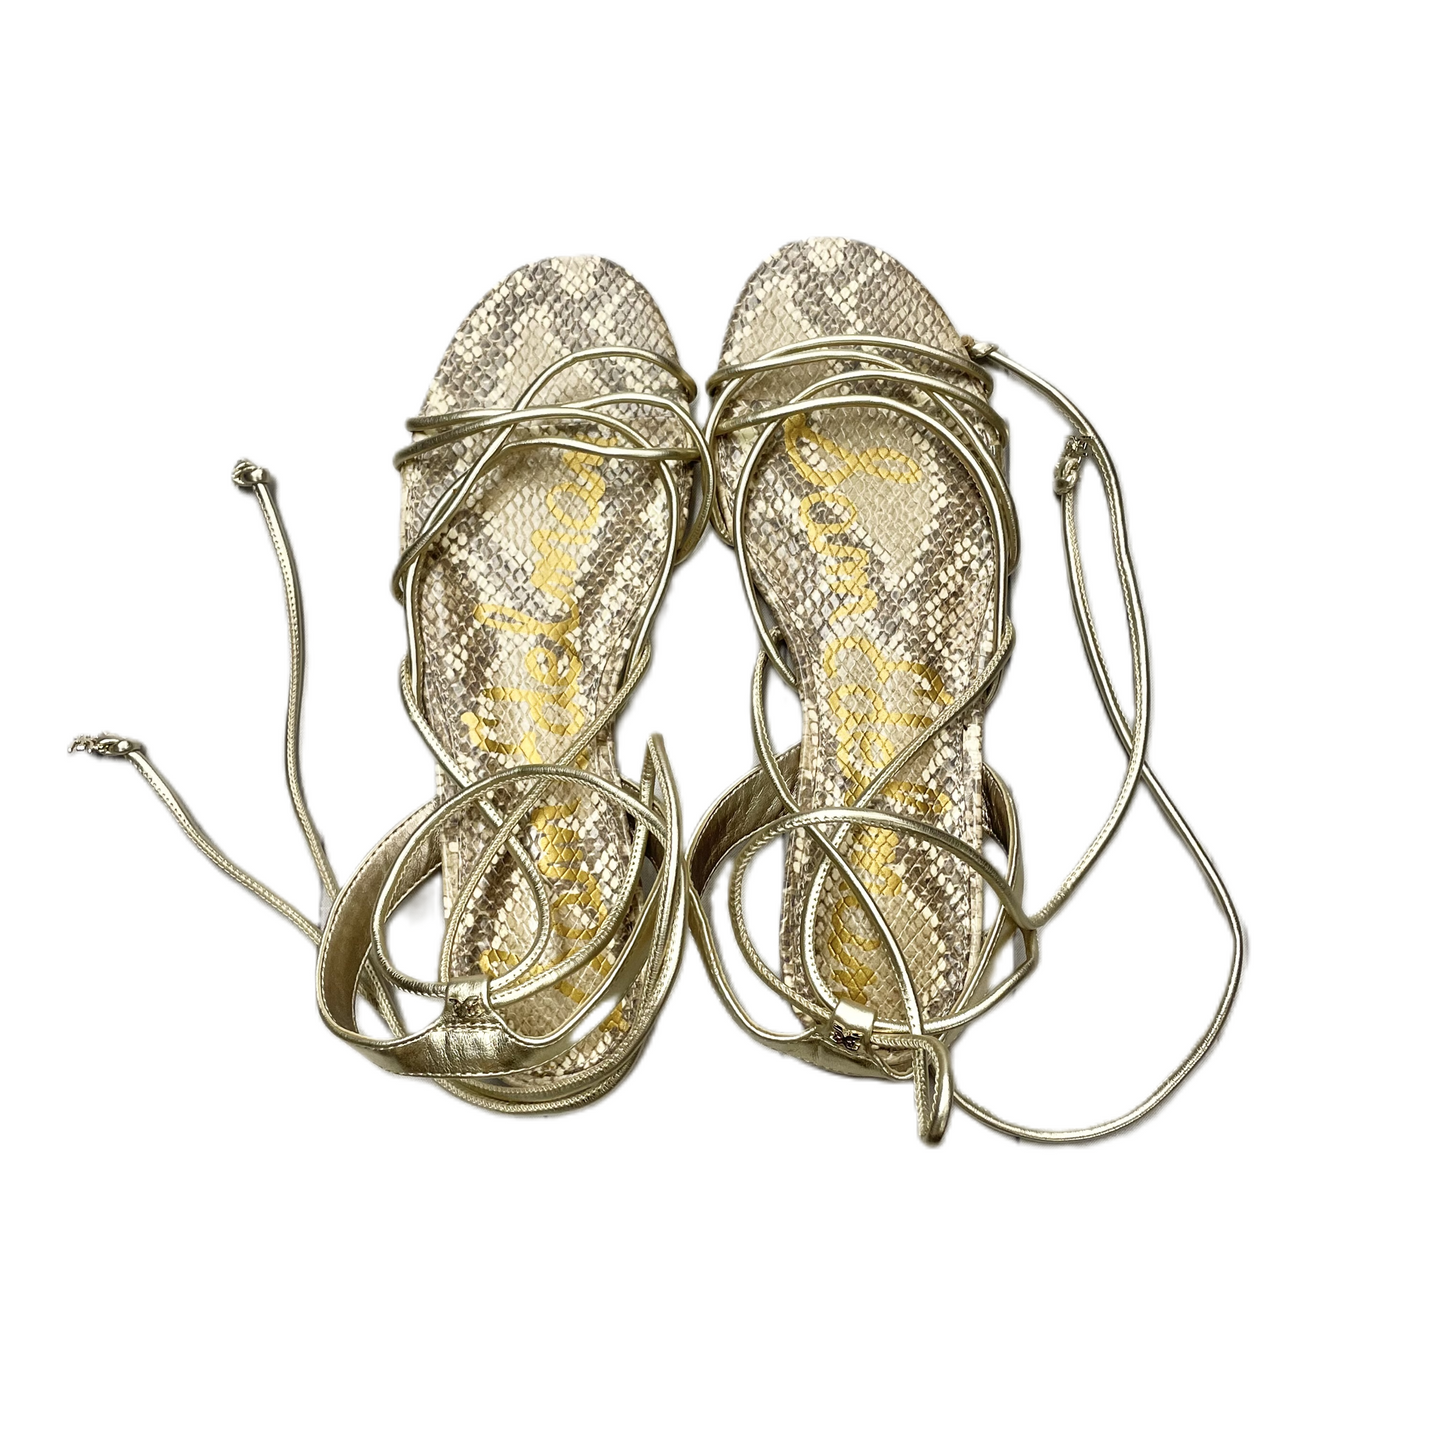 Sandals Flats By Sam Edelman  Size: 7.5